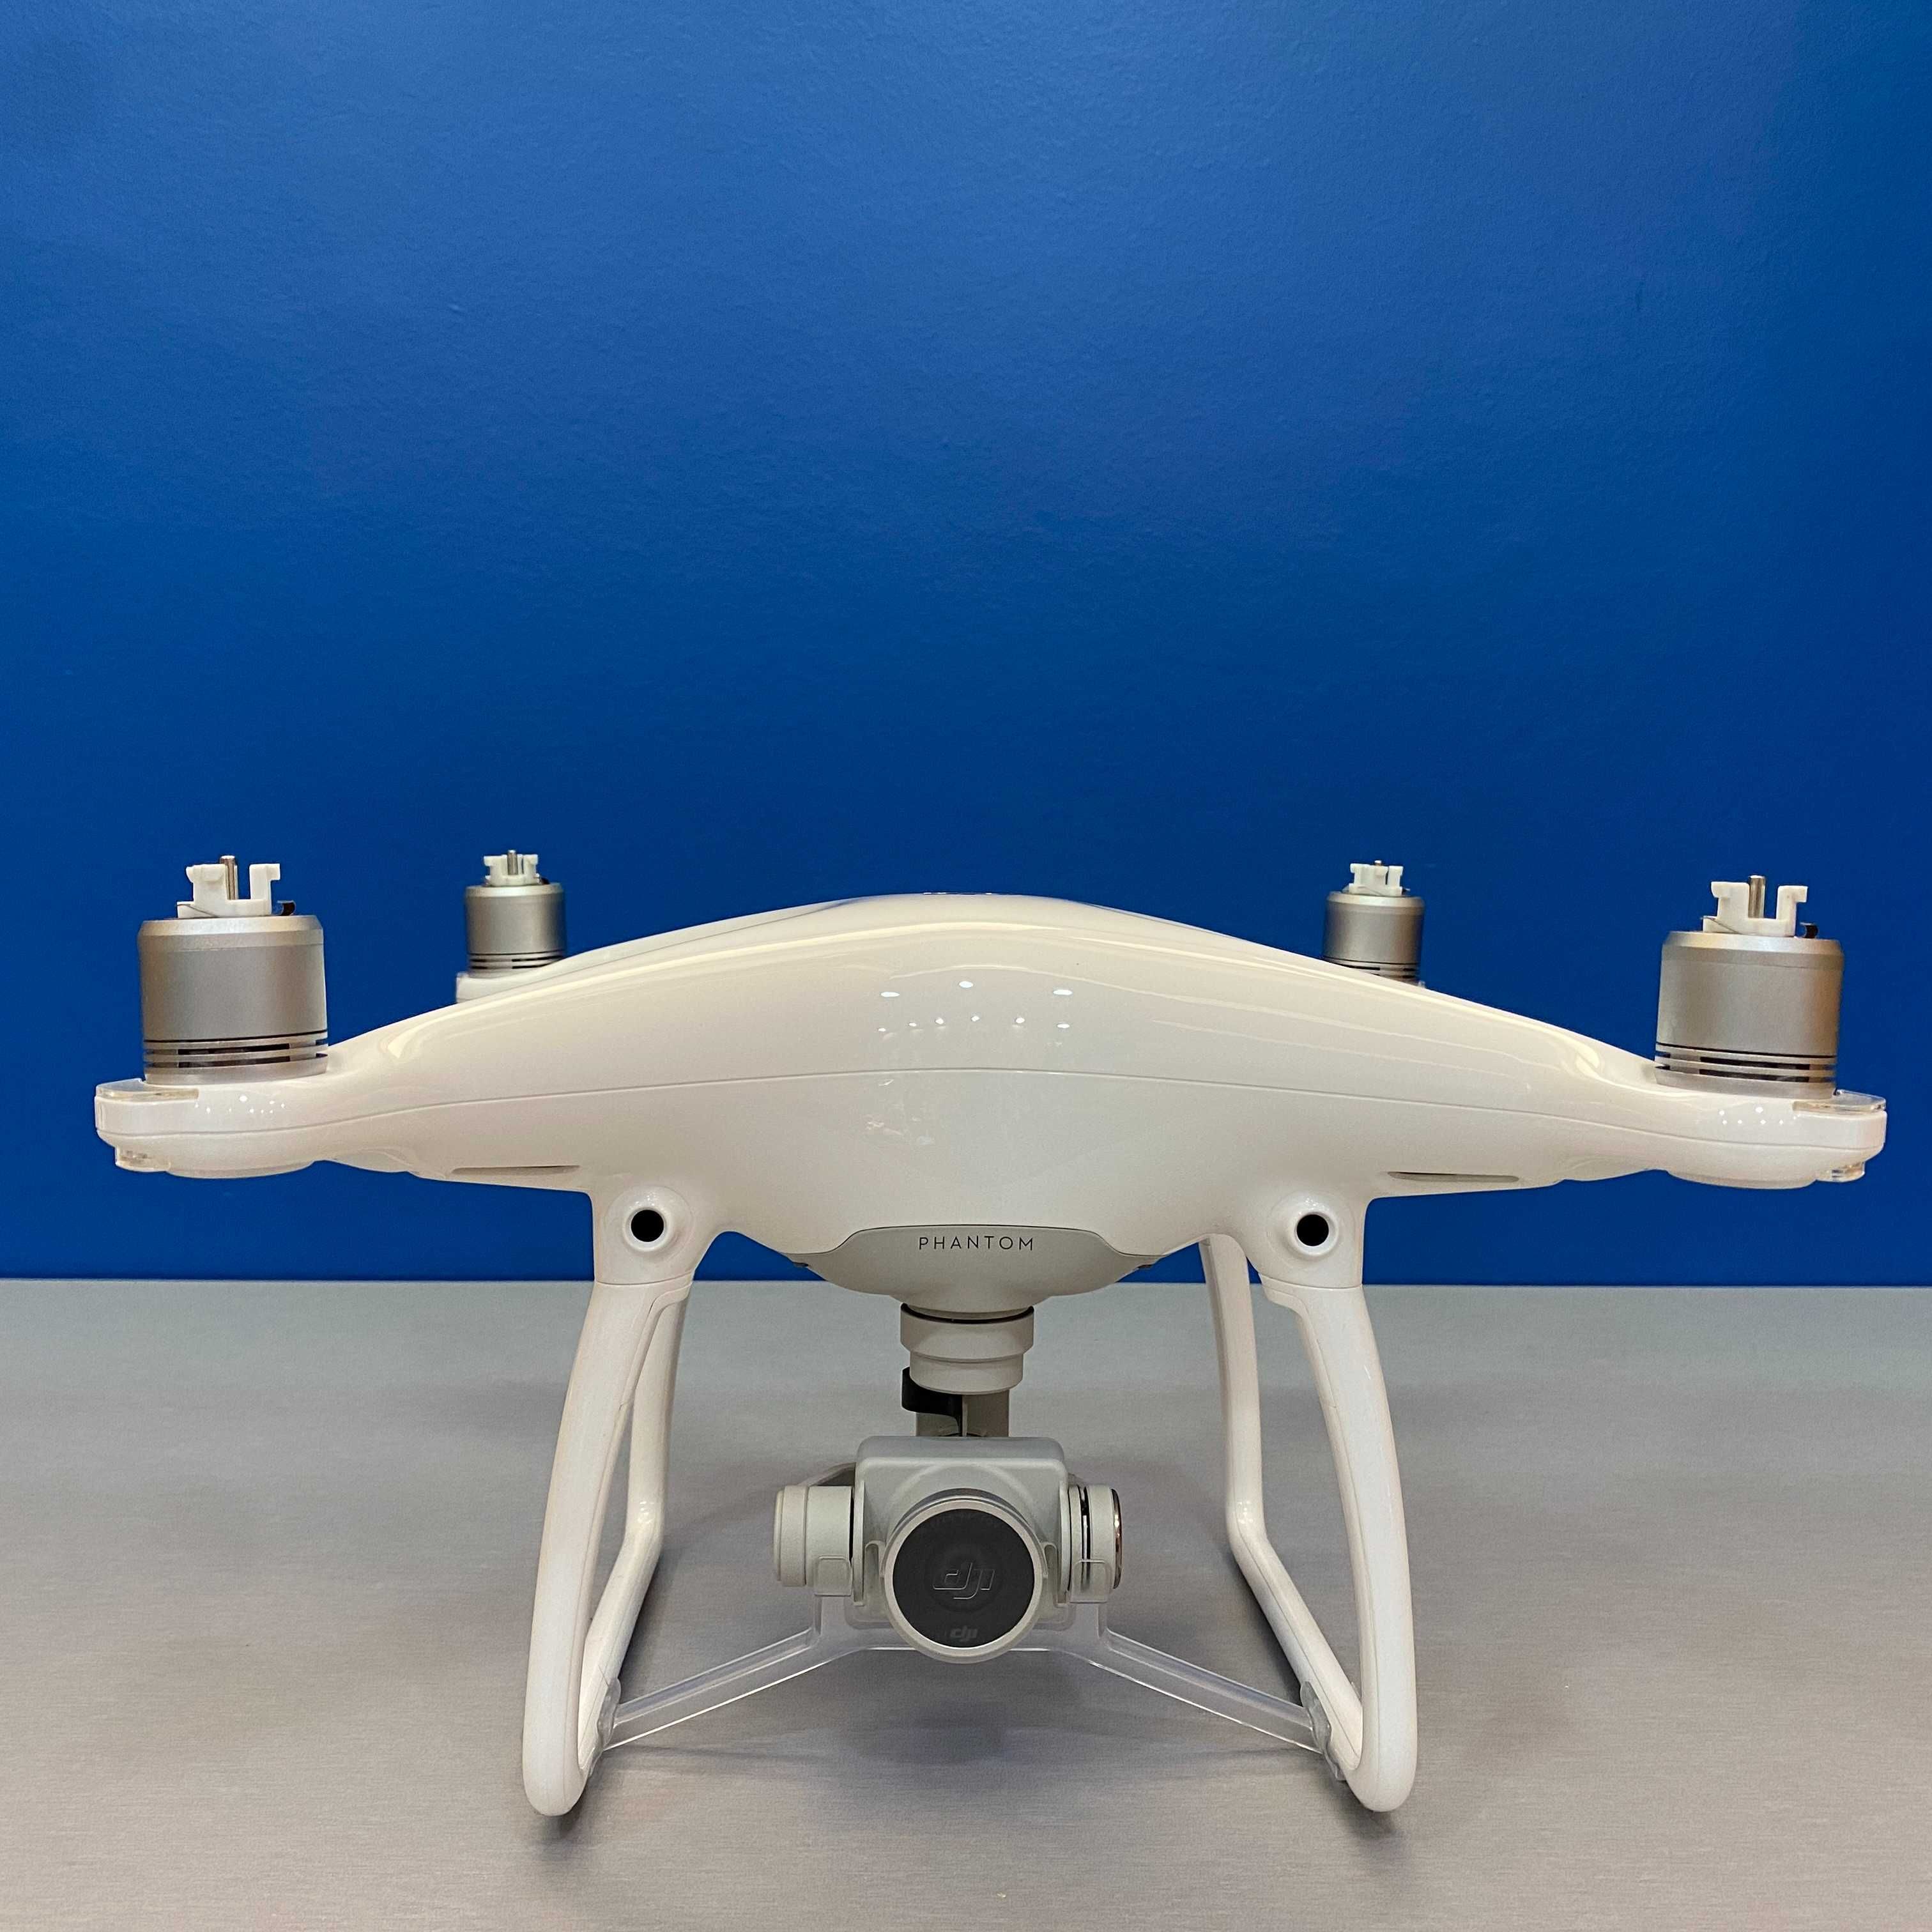 Drone DJI Phantom 4 (4K) + Extras